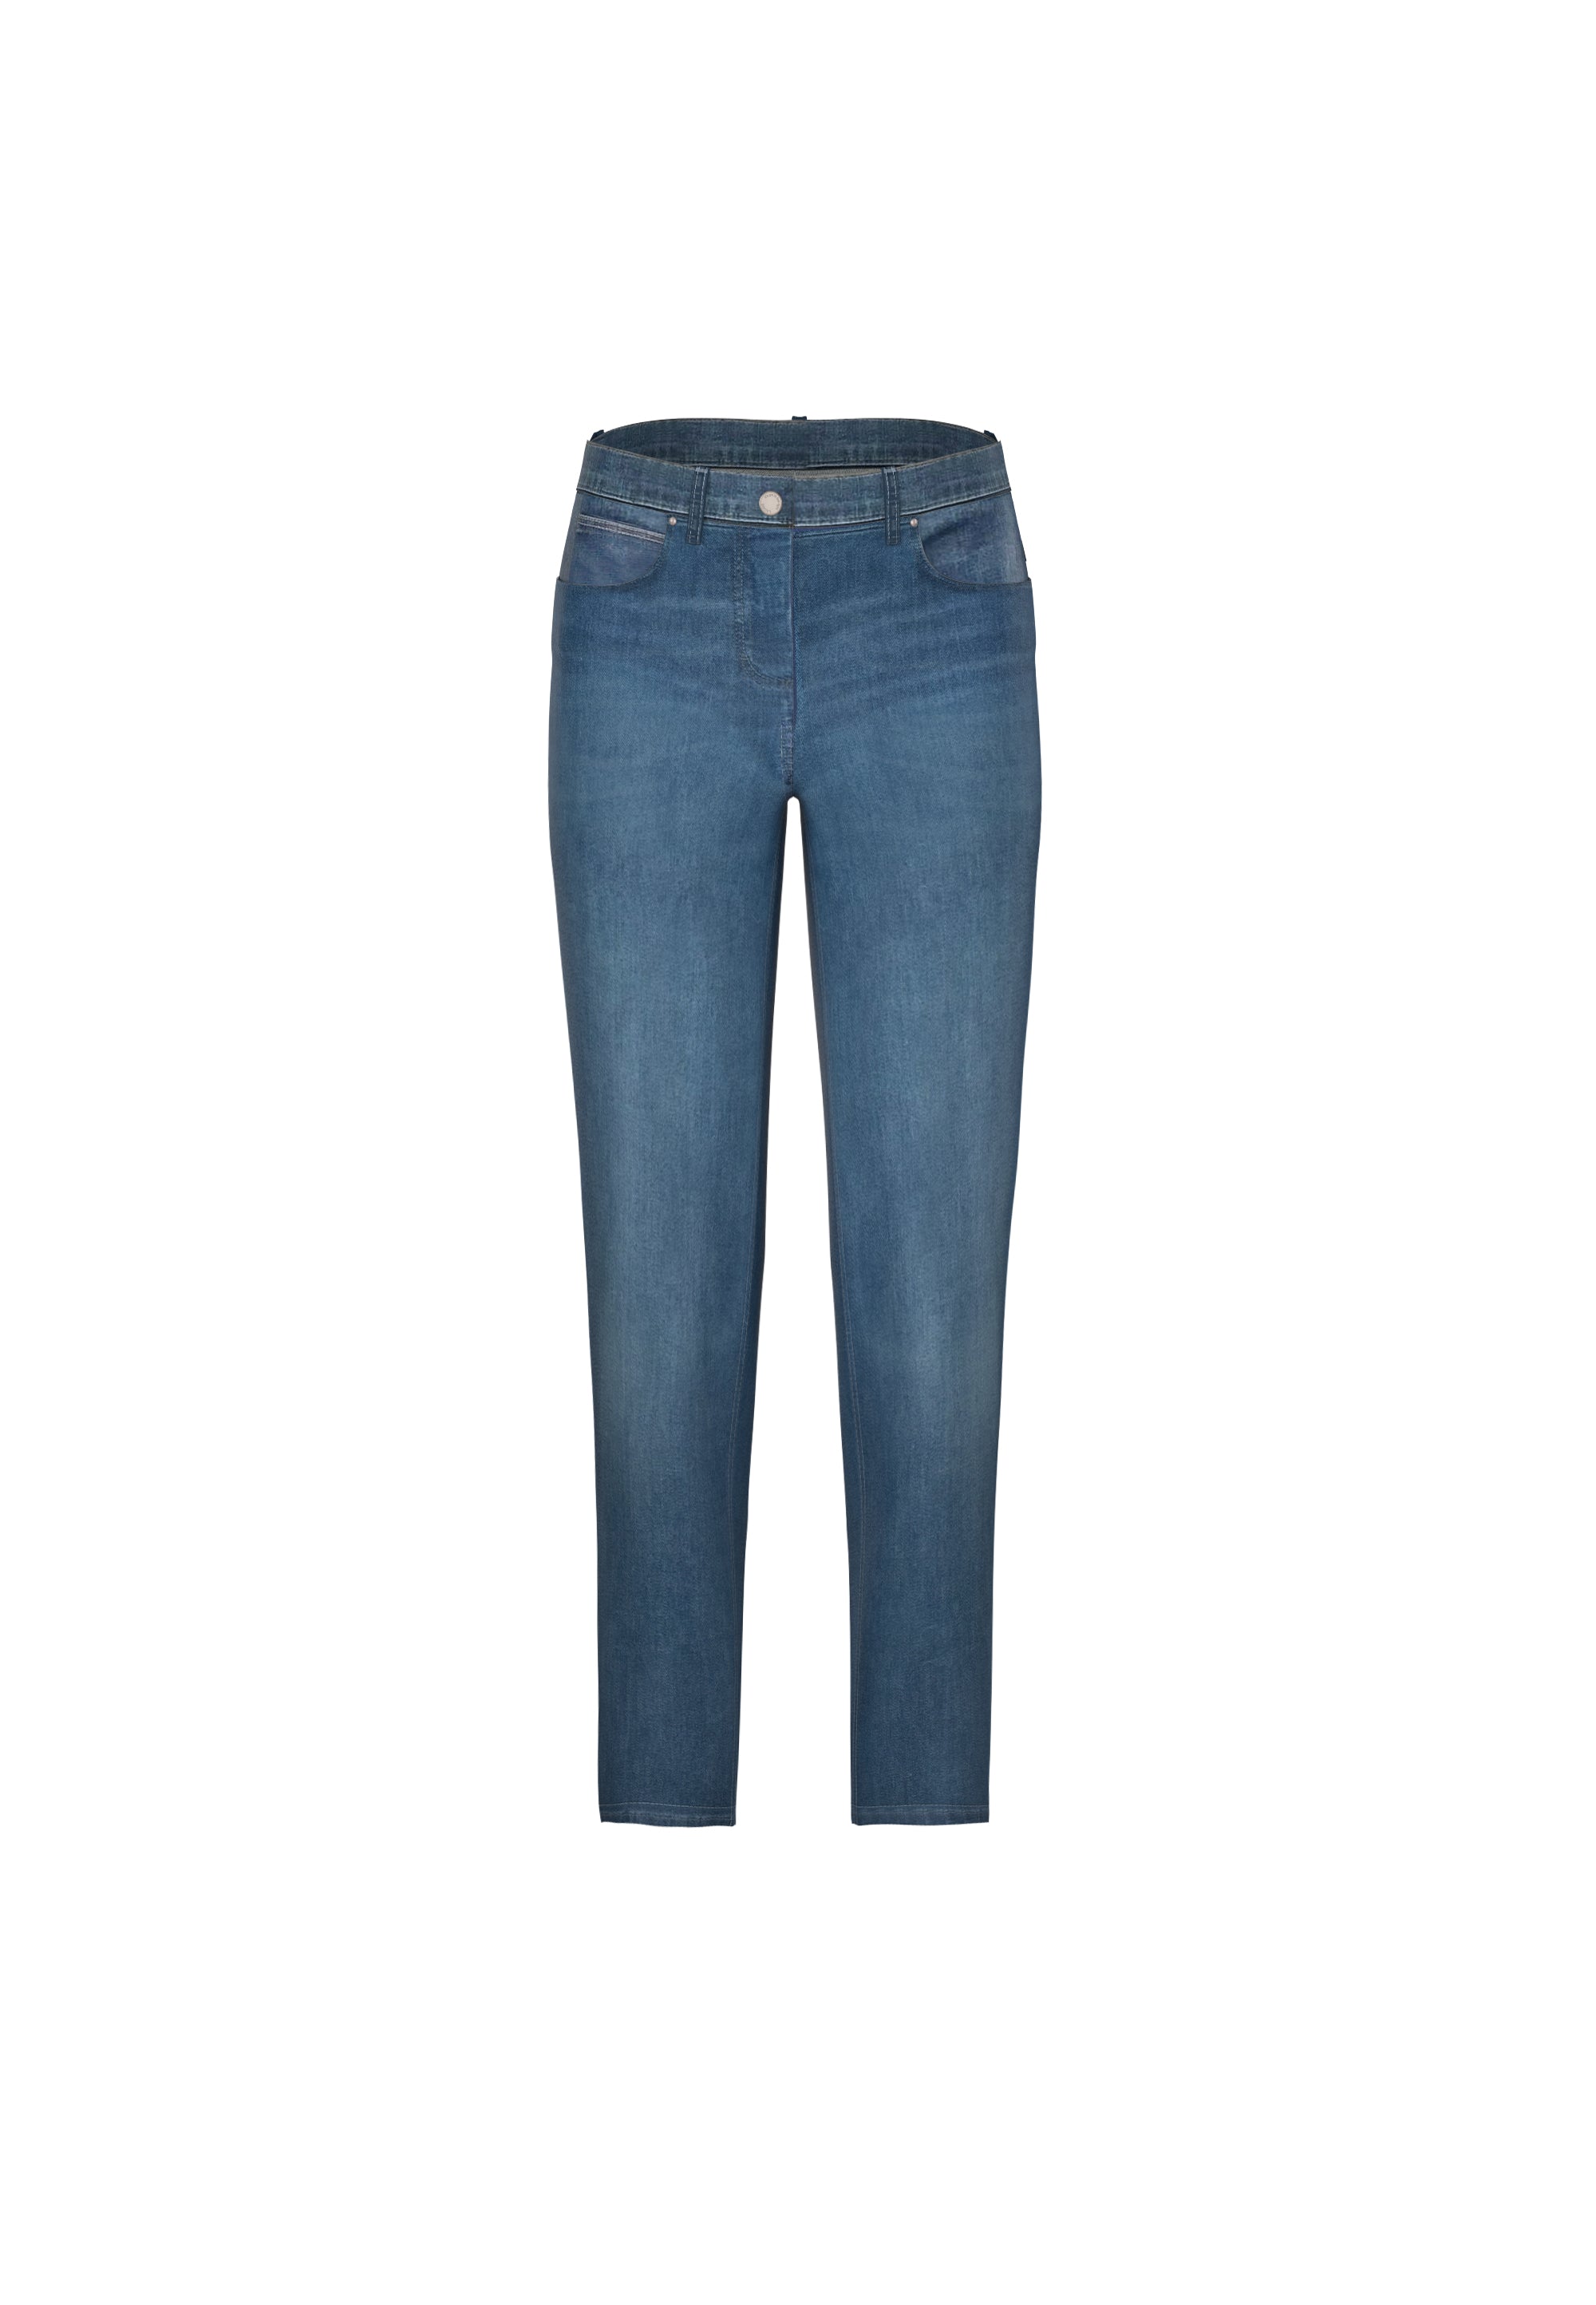 LAURIE Charlotte Regular - Medium Length Trousers REGULAR 49399 Washed Blue Denim